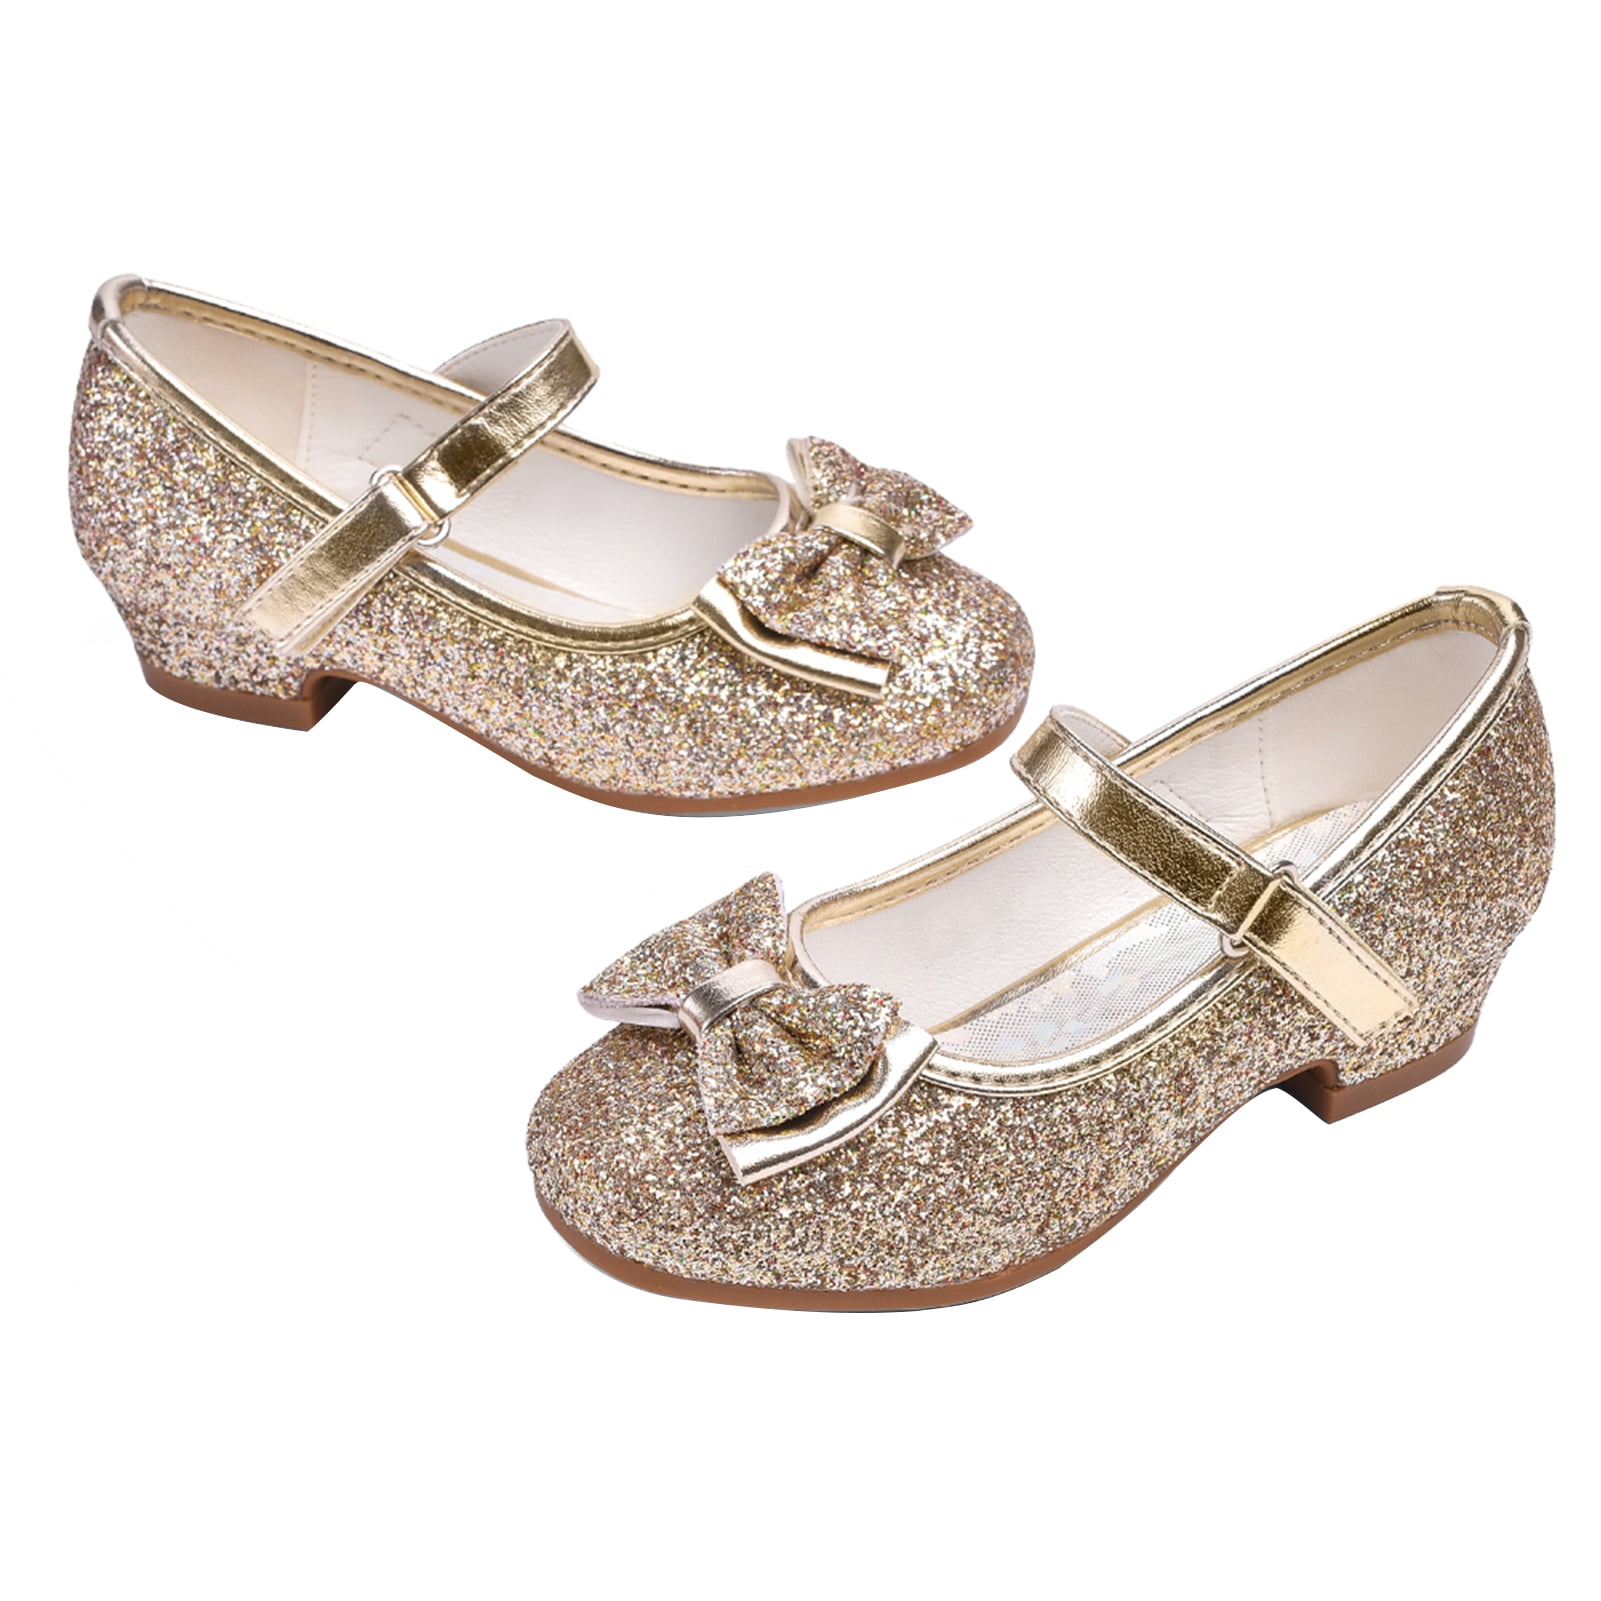 Stelle Girls Mary Jane Glitter Shoes Low Heel Princess Dress Shoes,Toddler Little  Girls Bowknot Flower Girl Wedding Party Dress Pump Shoes,Gold 